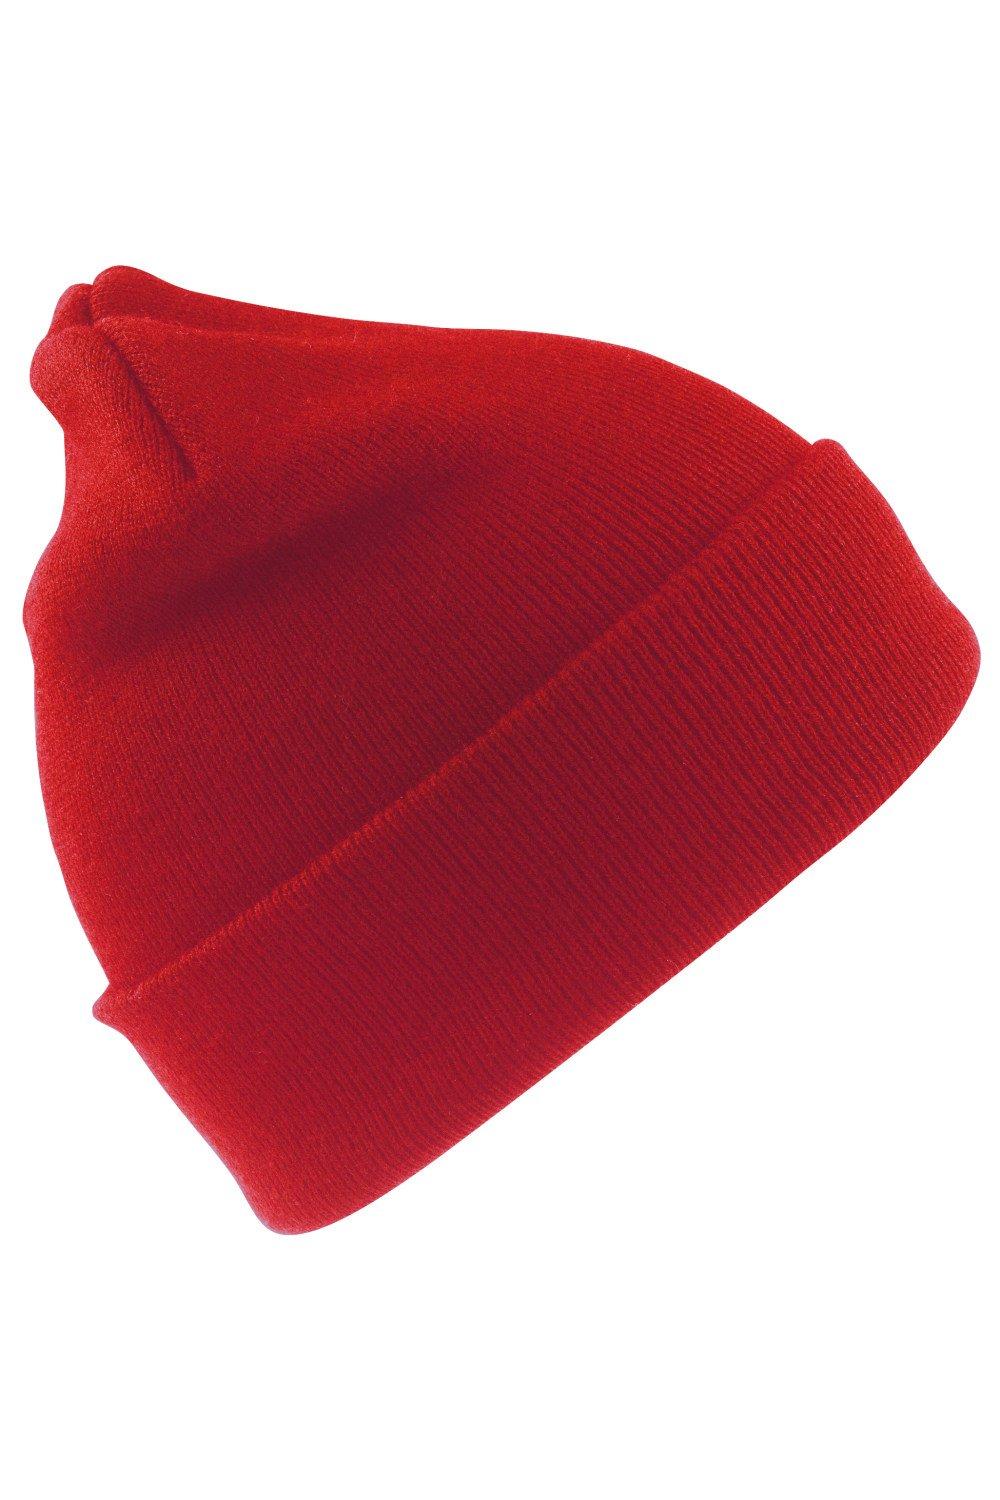 Шерстяная тяжелая трикотажная термозимняя/лыжная шапка Result, красный